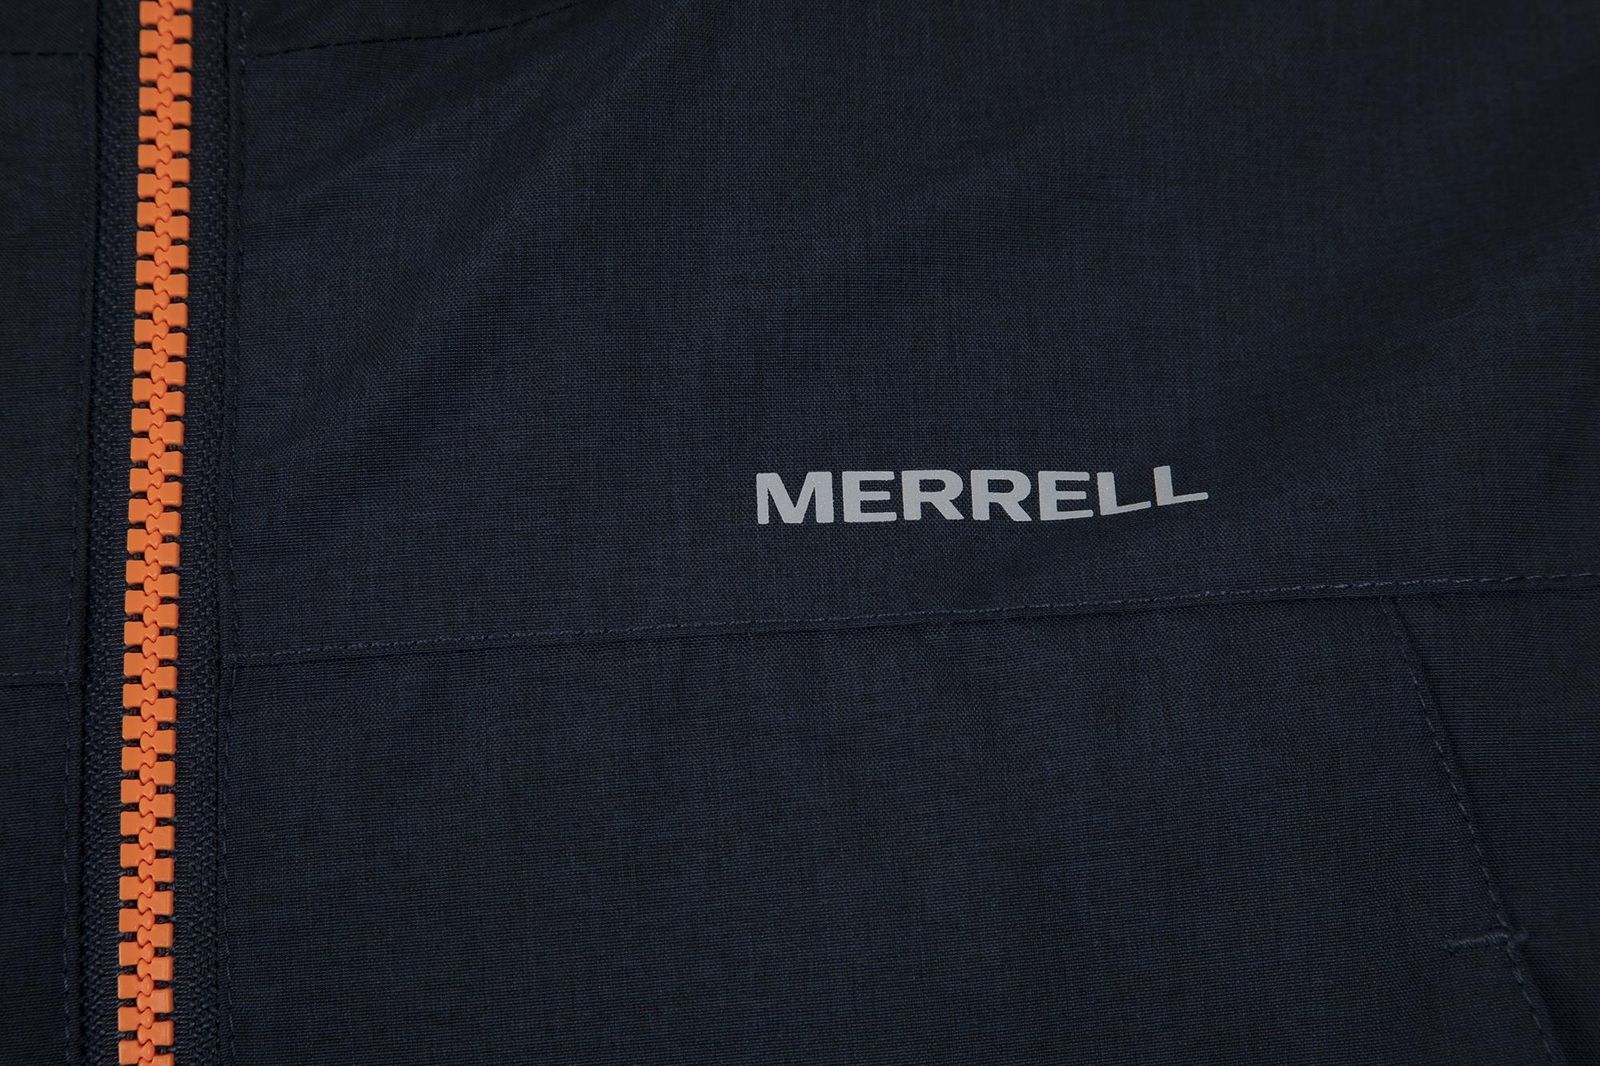   Merrell Men's Windbreaker, : -. S19AMRJAM04-Z4.  46